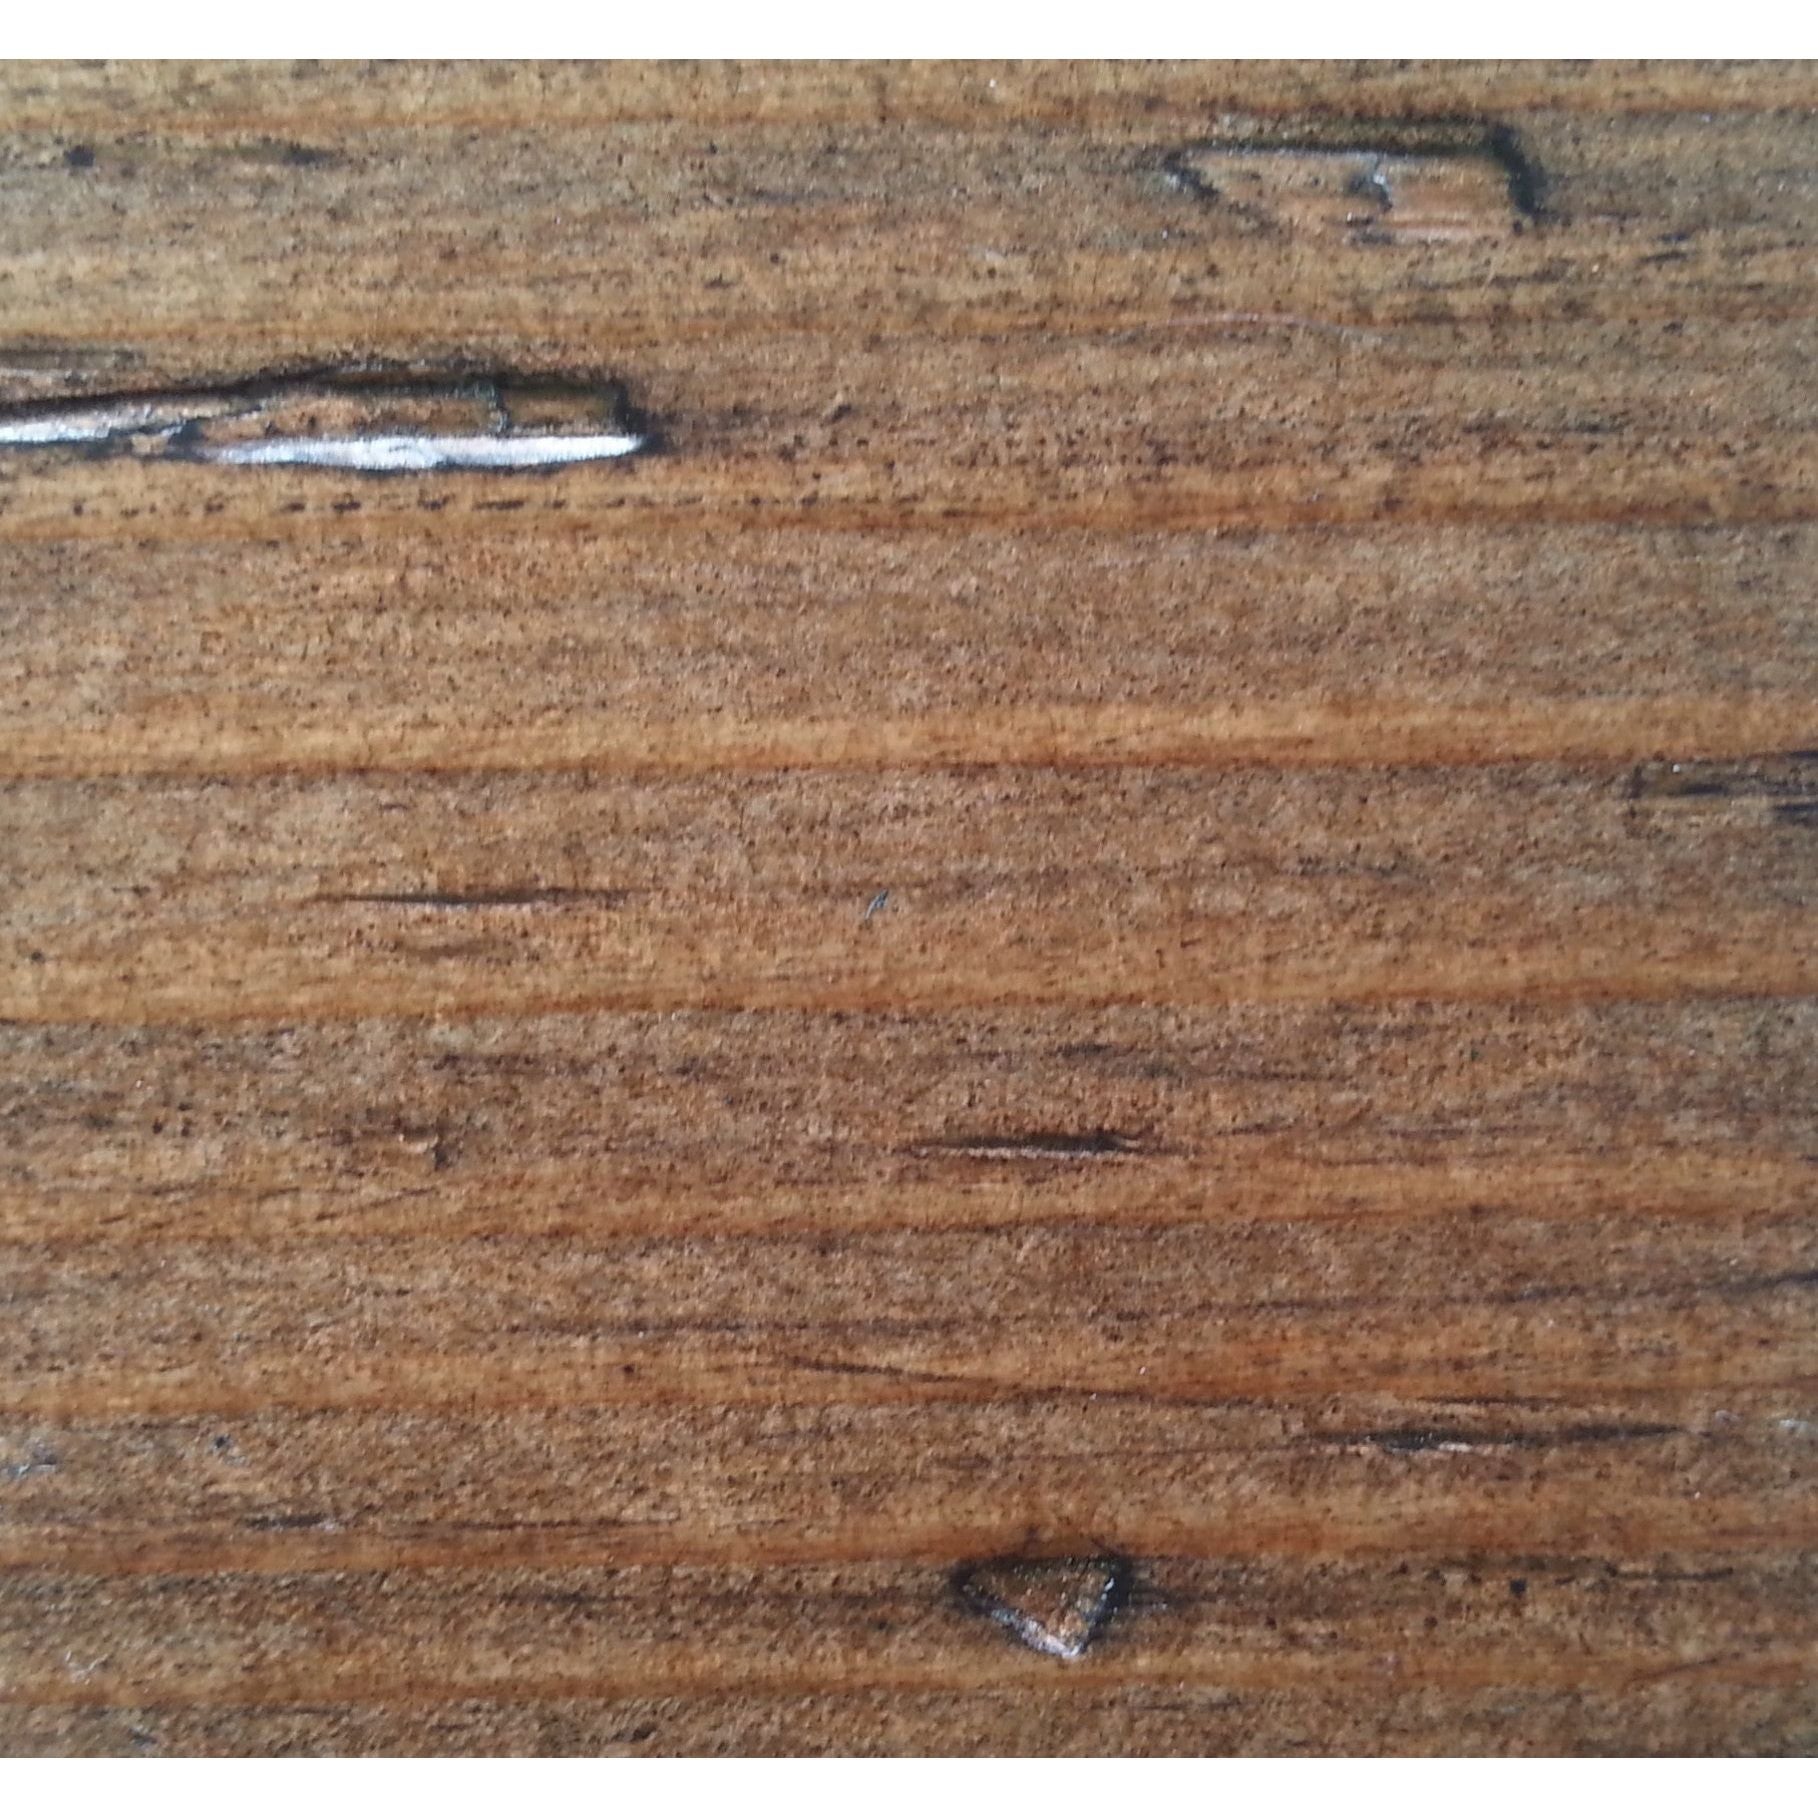 Weathered Black Finish on Reclaimed Wood – Mortise & Tenon